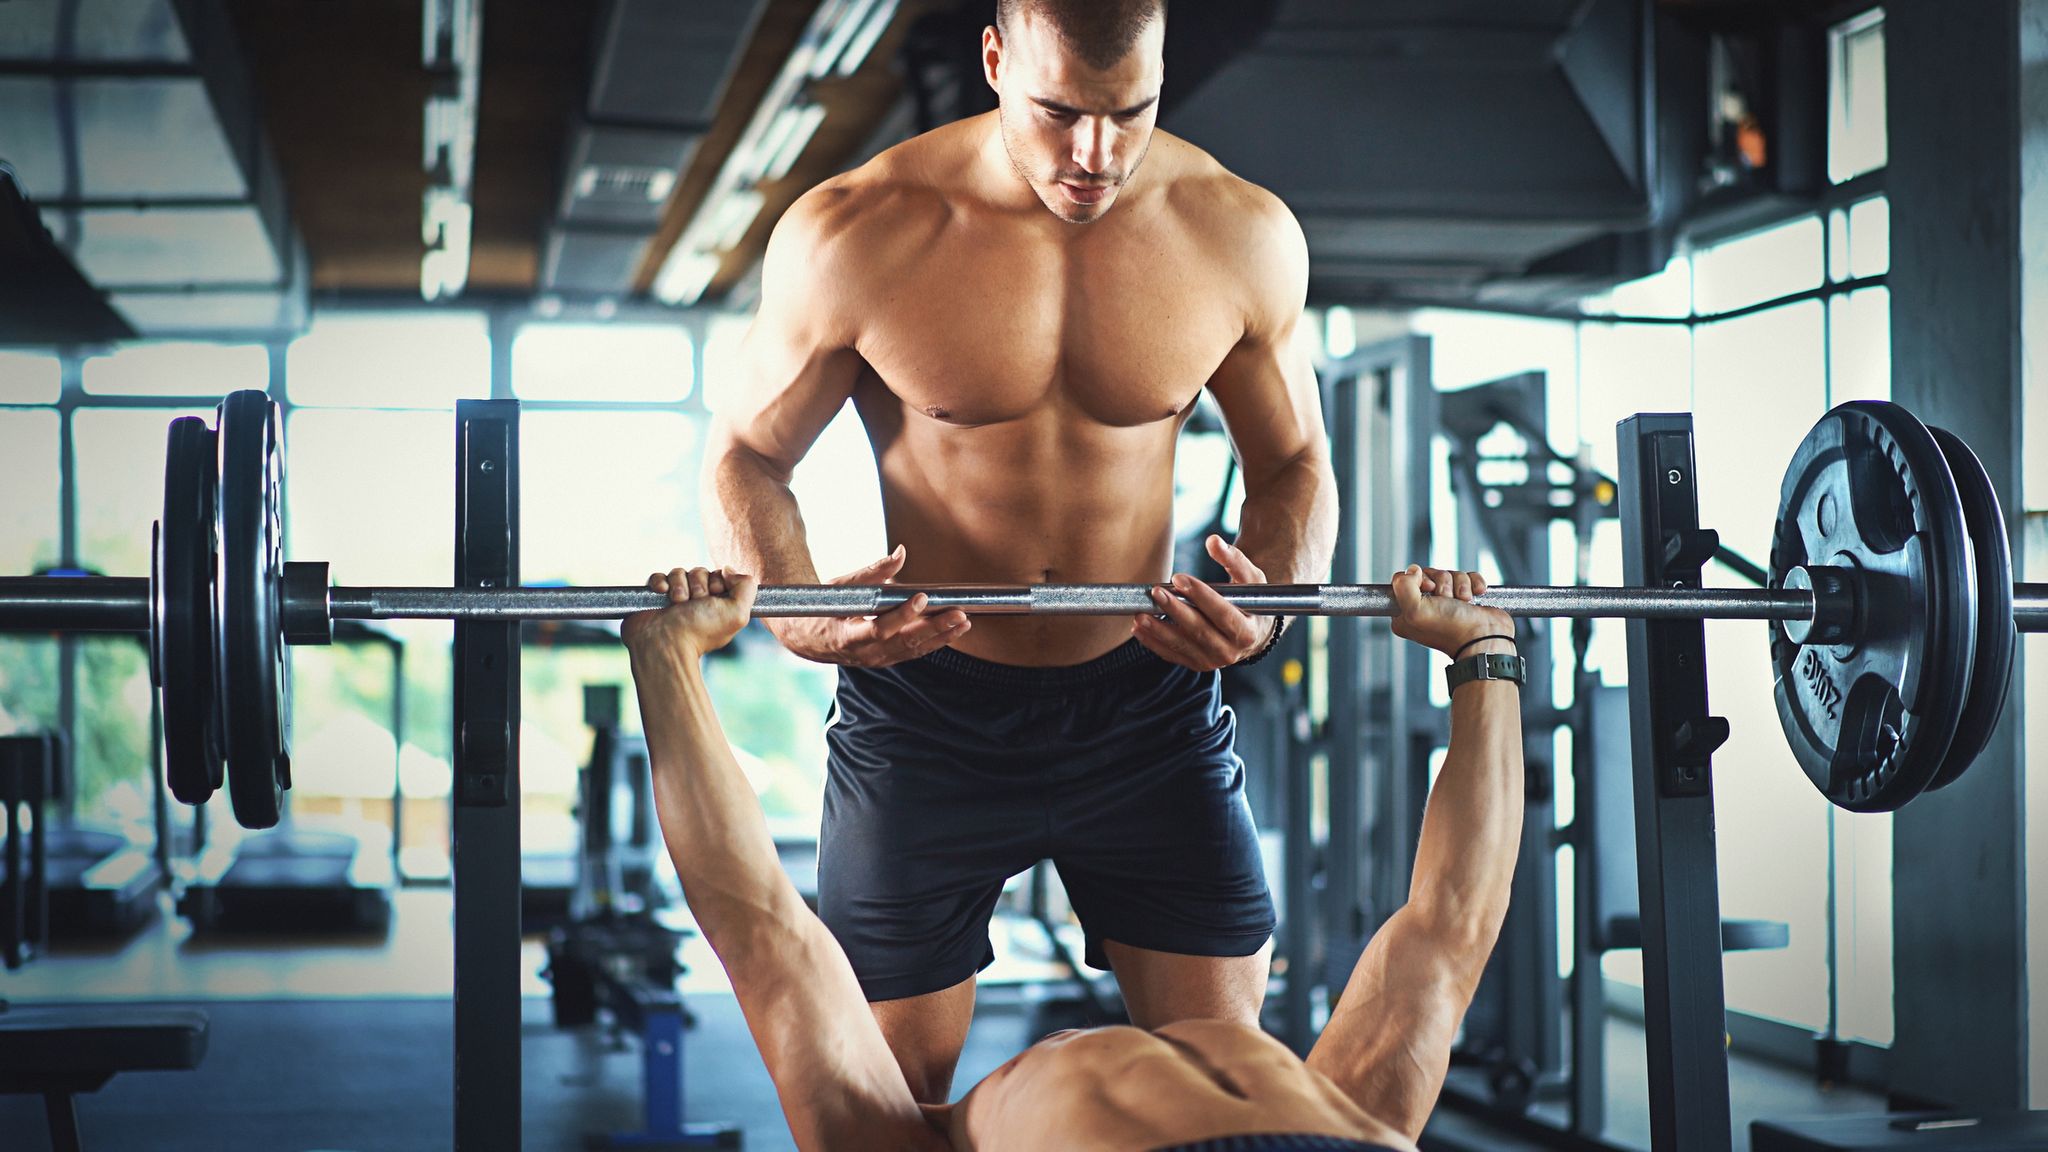 Tip: How Limb Length Affects Training